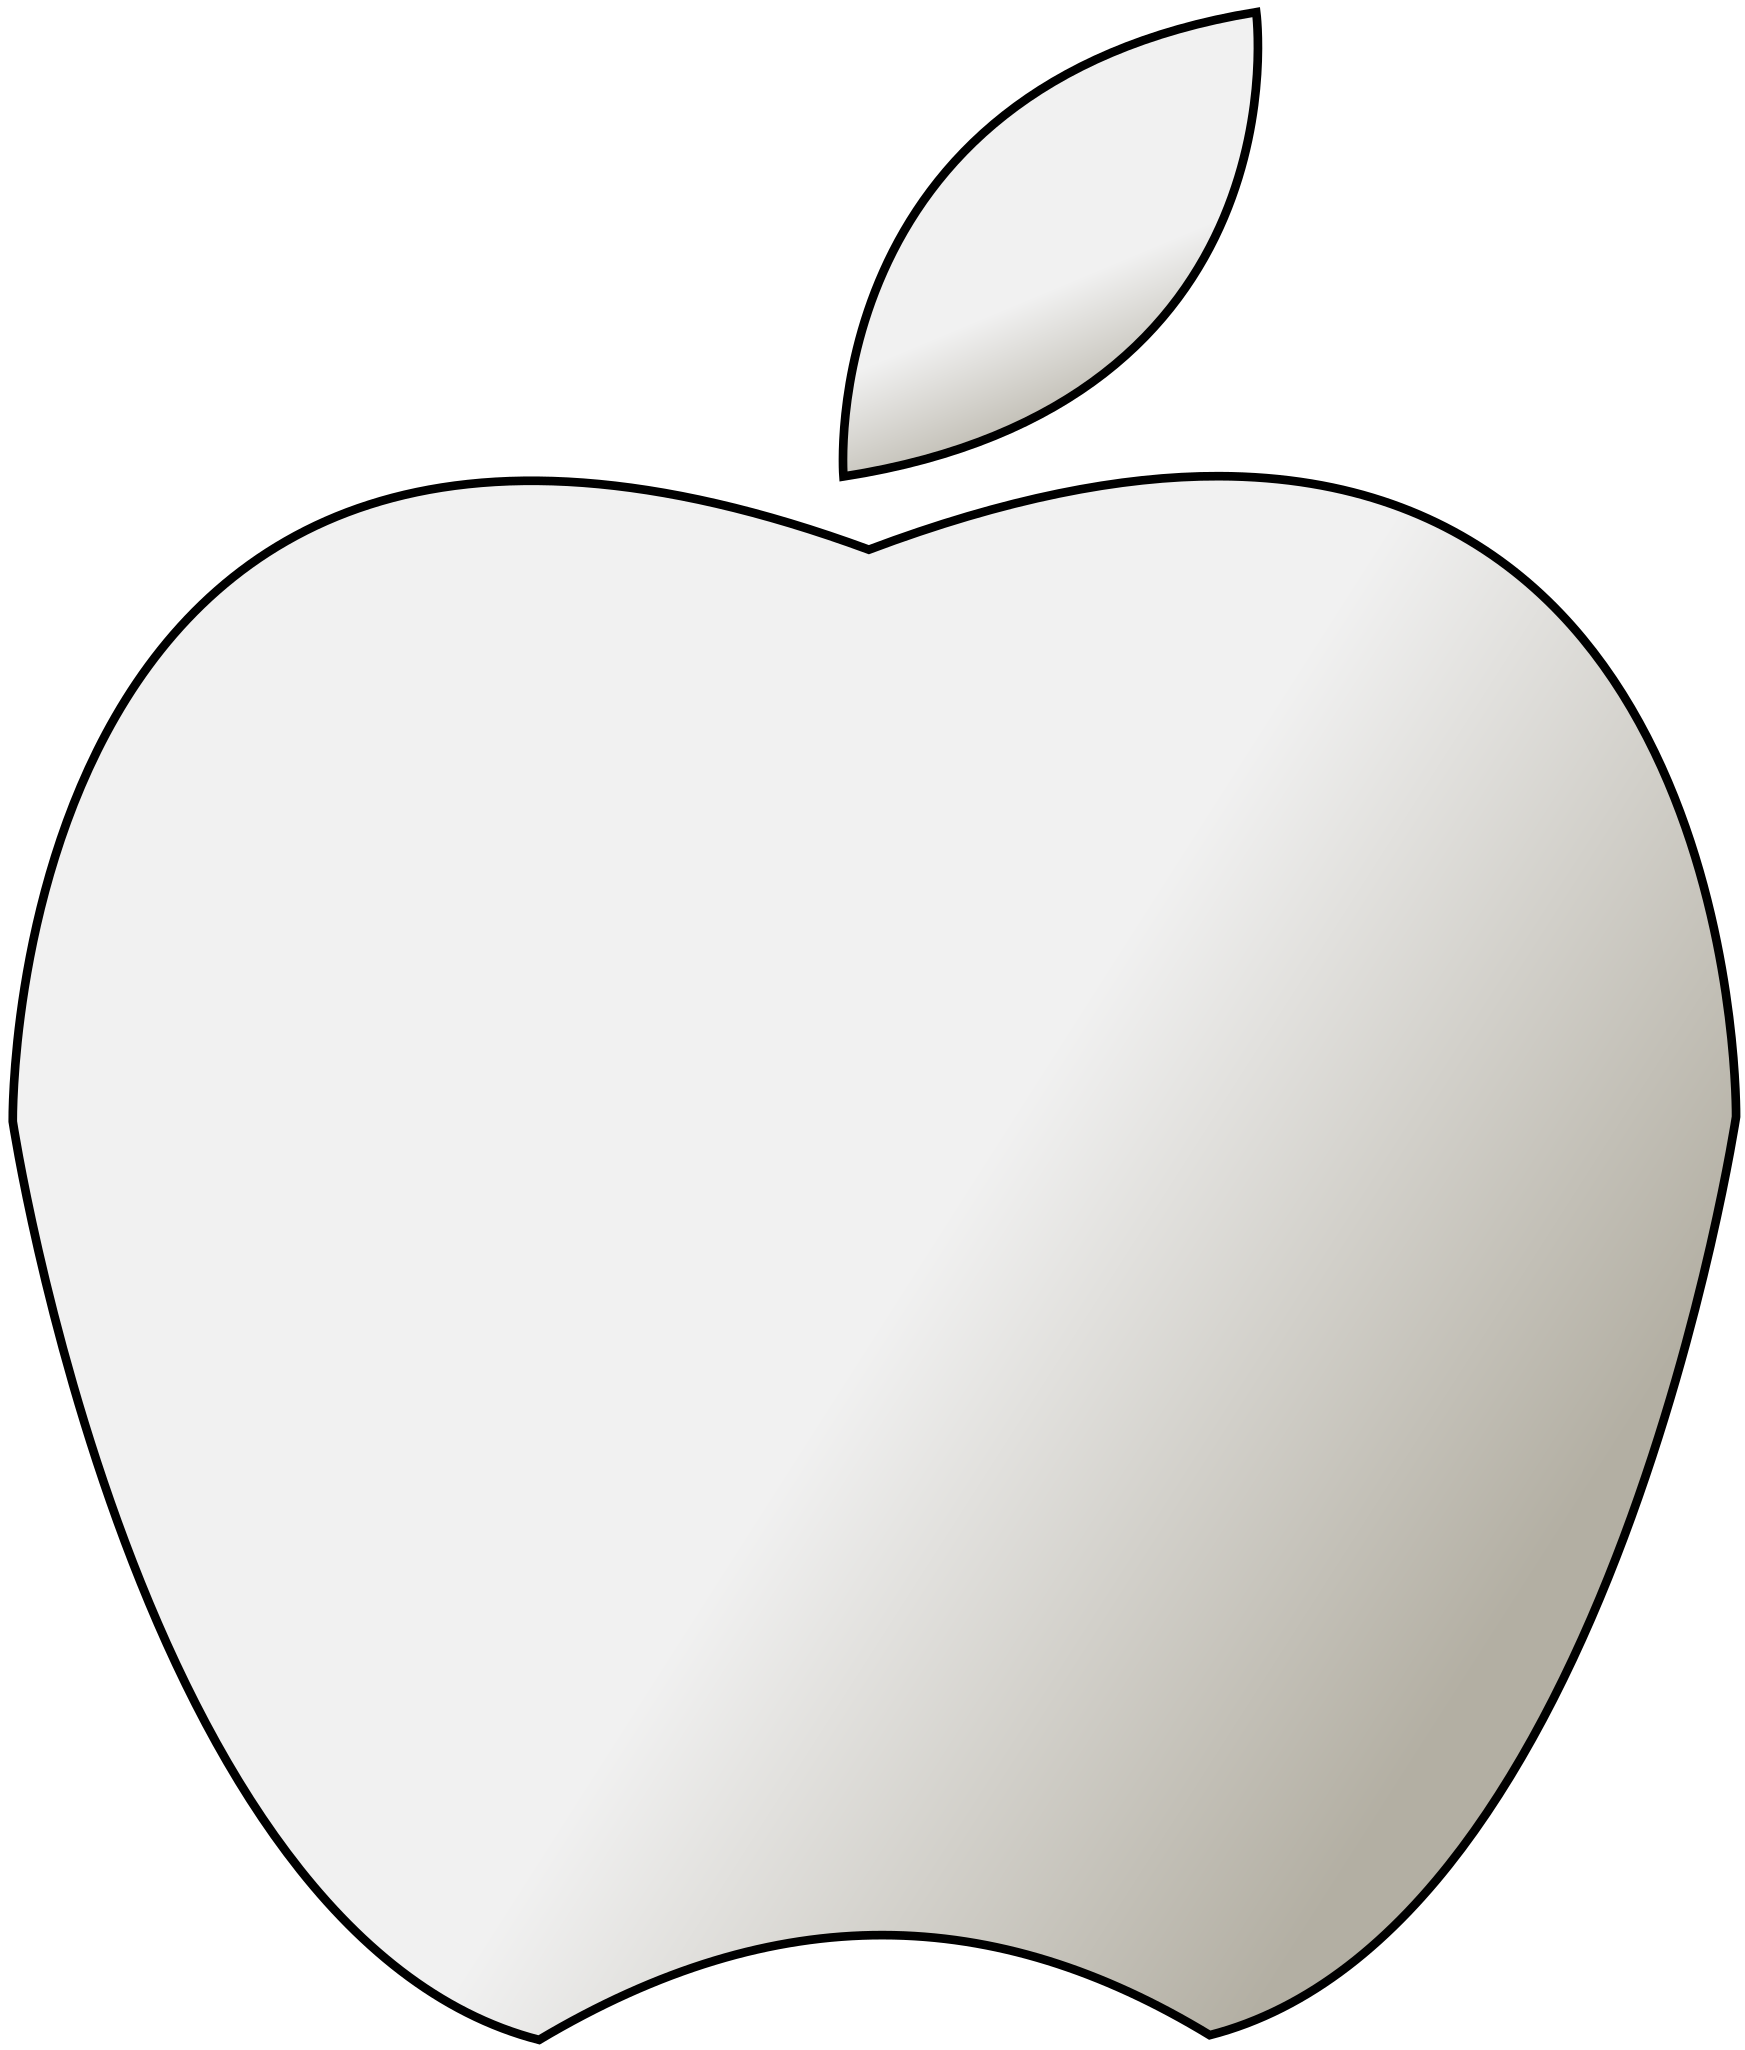 black apple logo